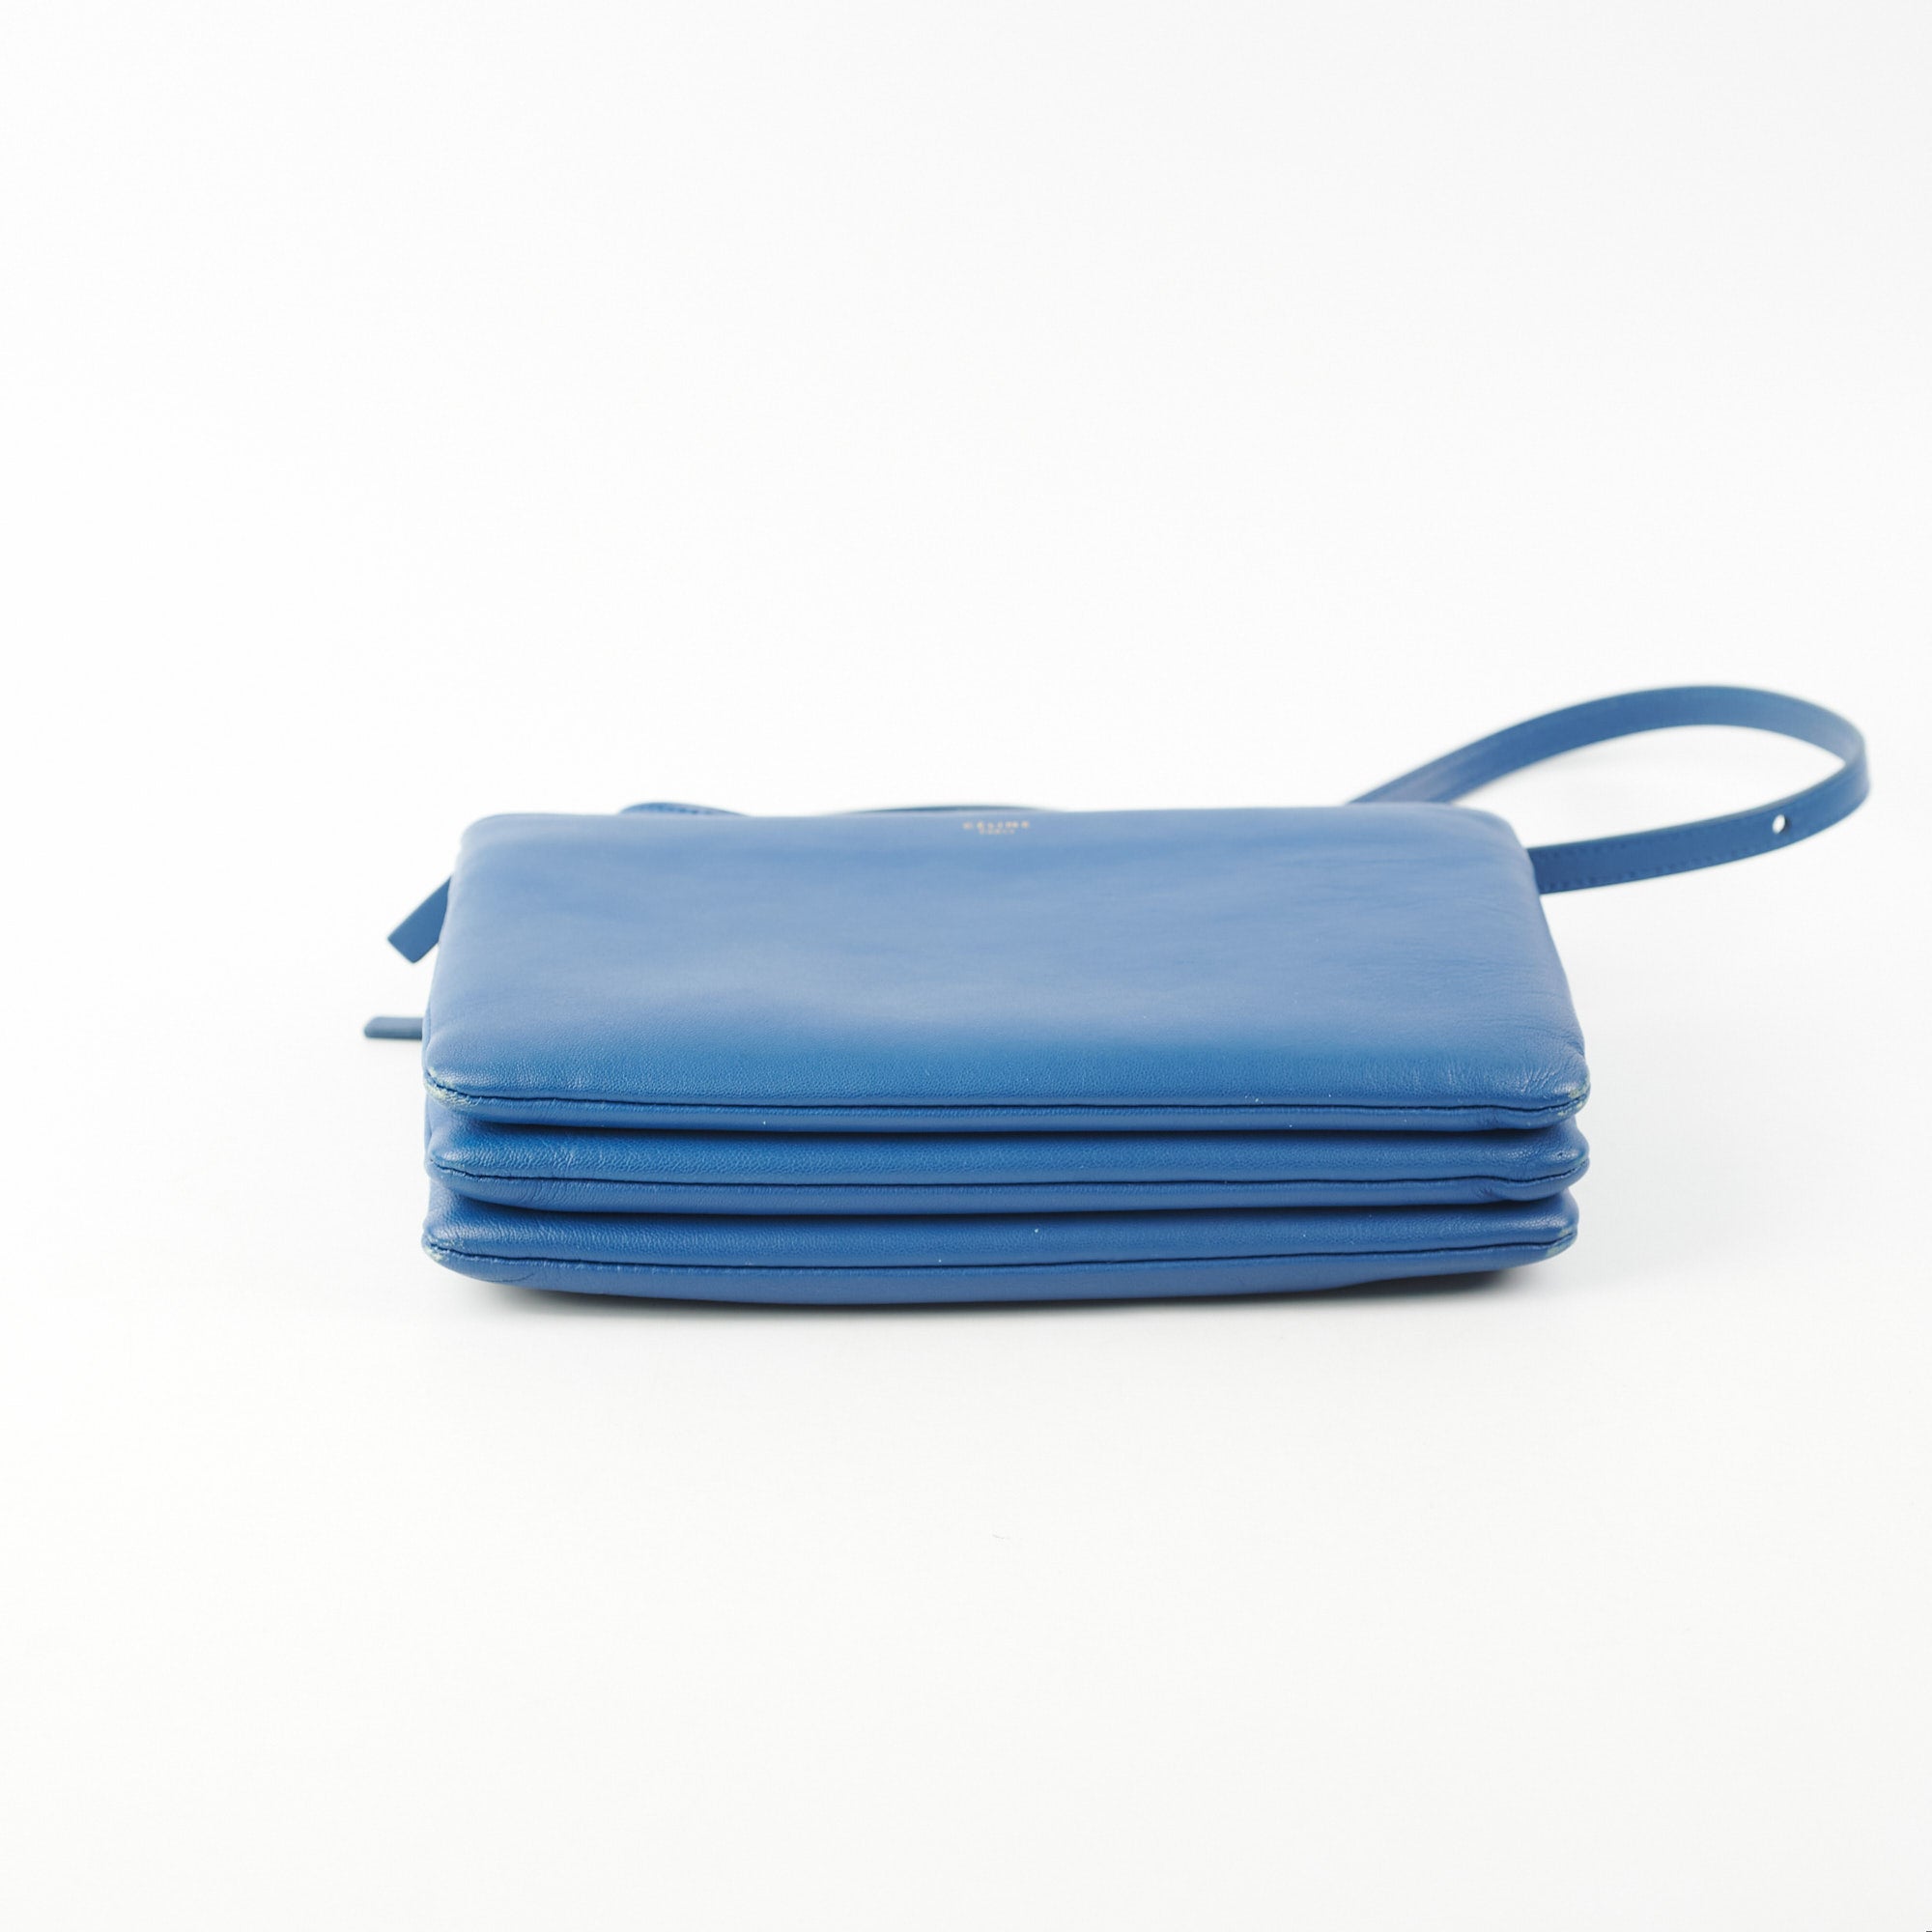 Celine Trio Crossbody Bag Leather Large Blue 1883452